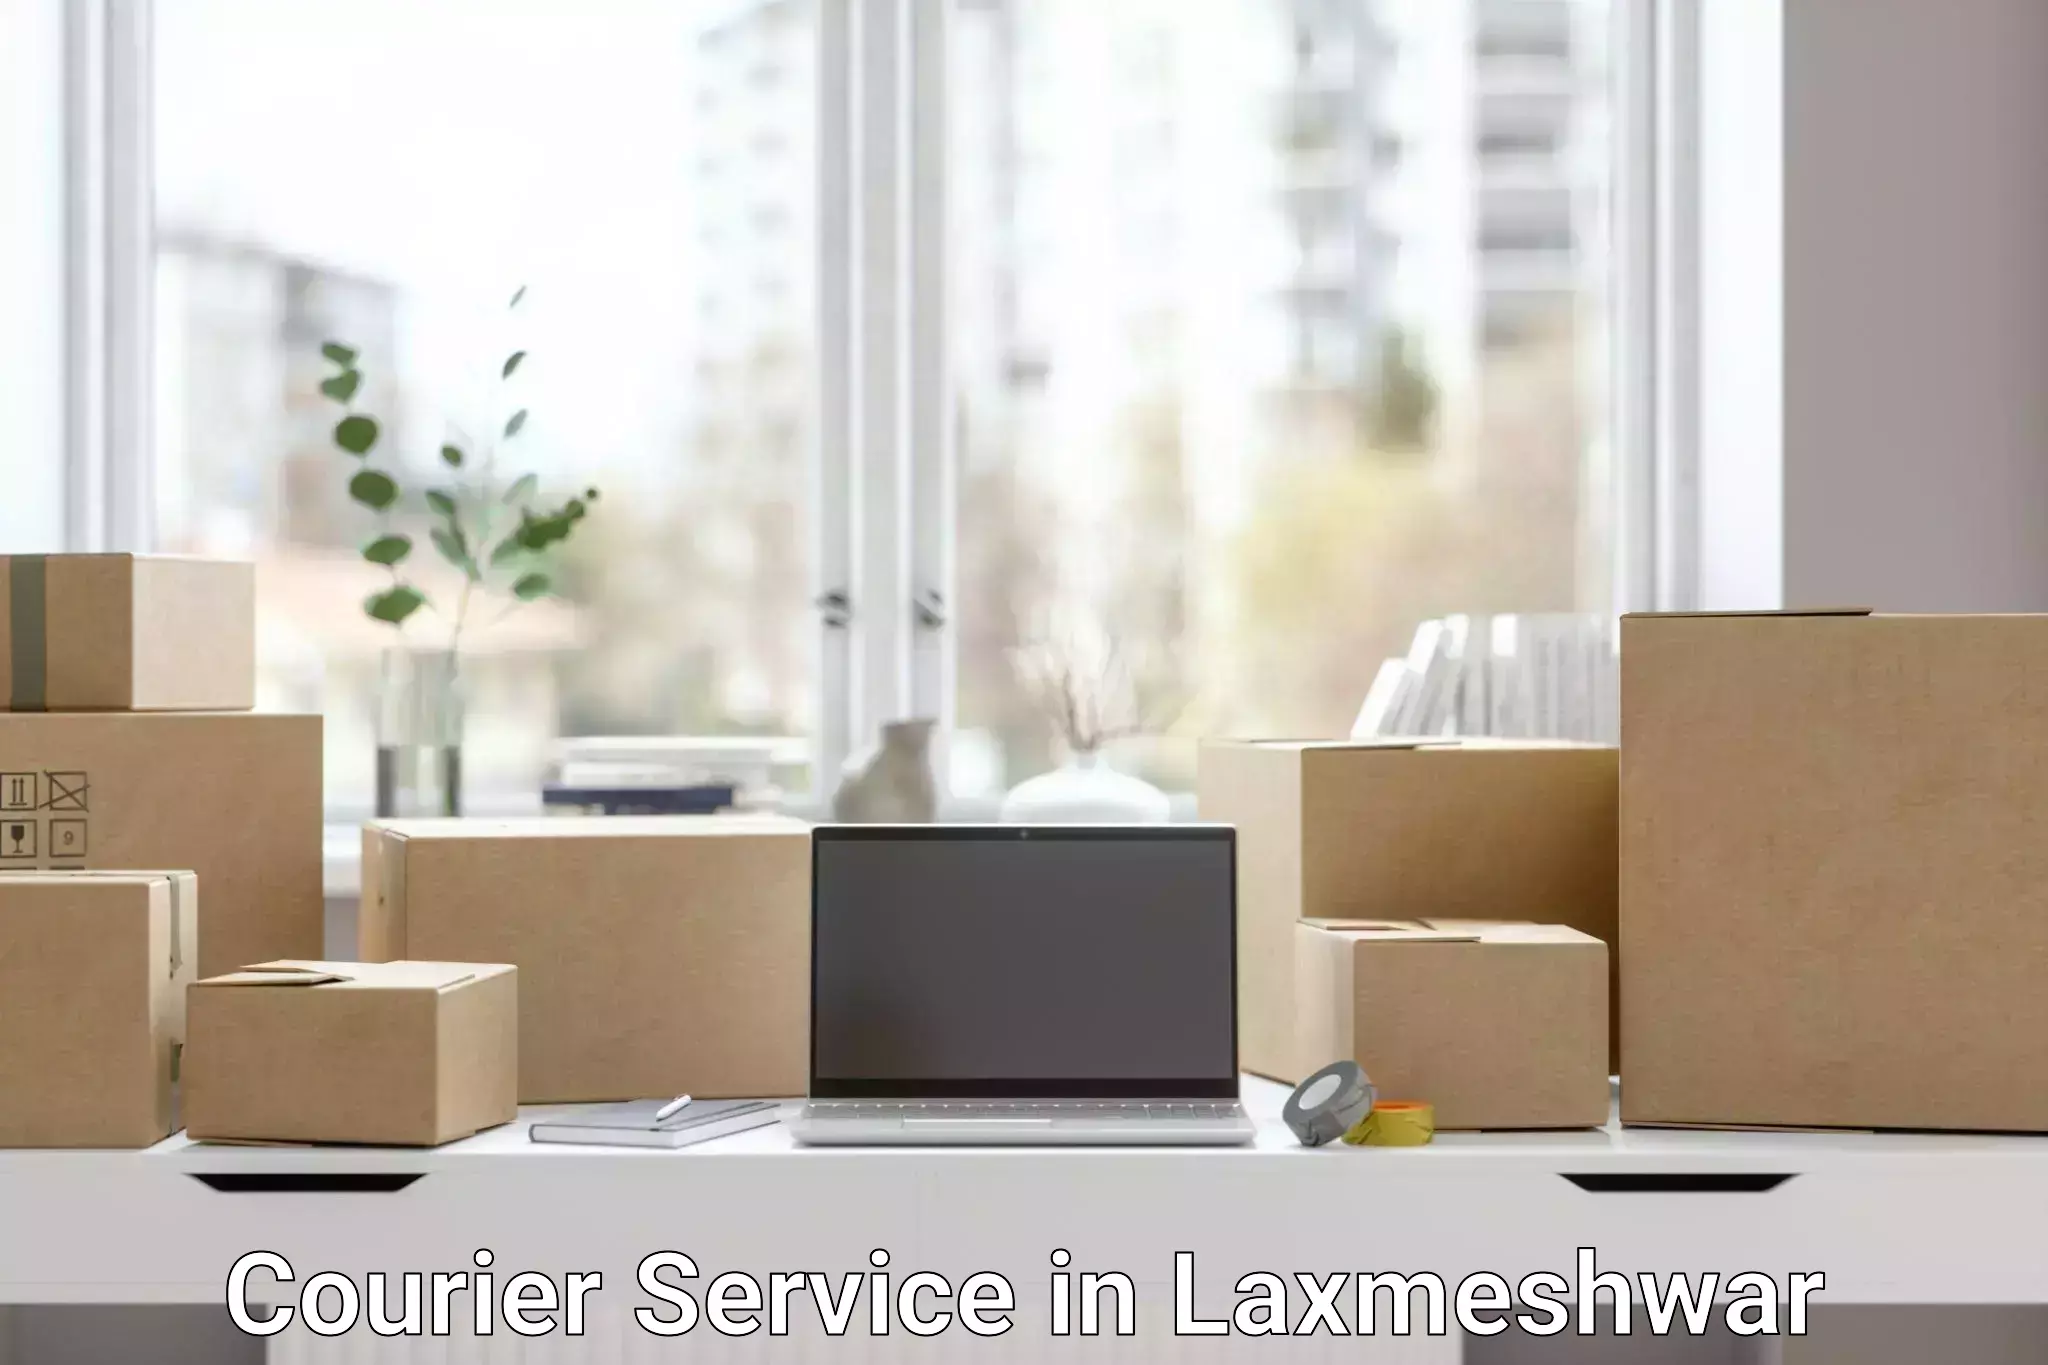 Innovative logistics solutions in Laxmeshwar